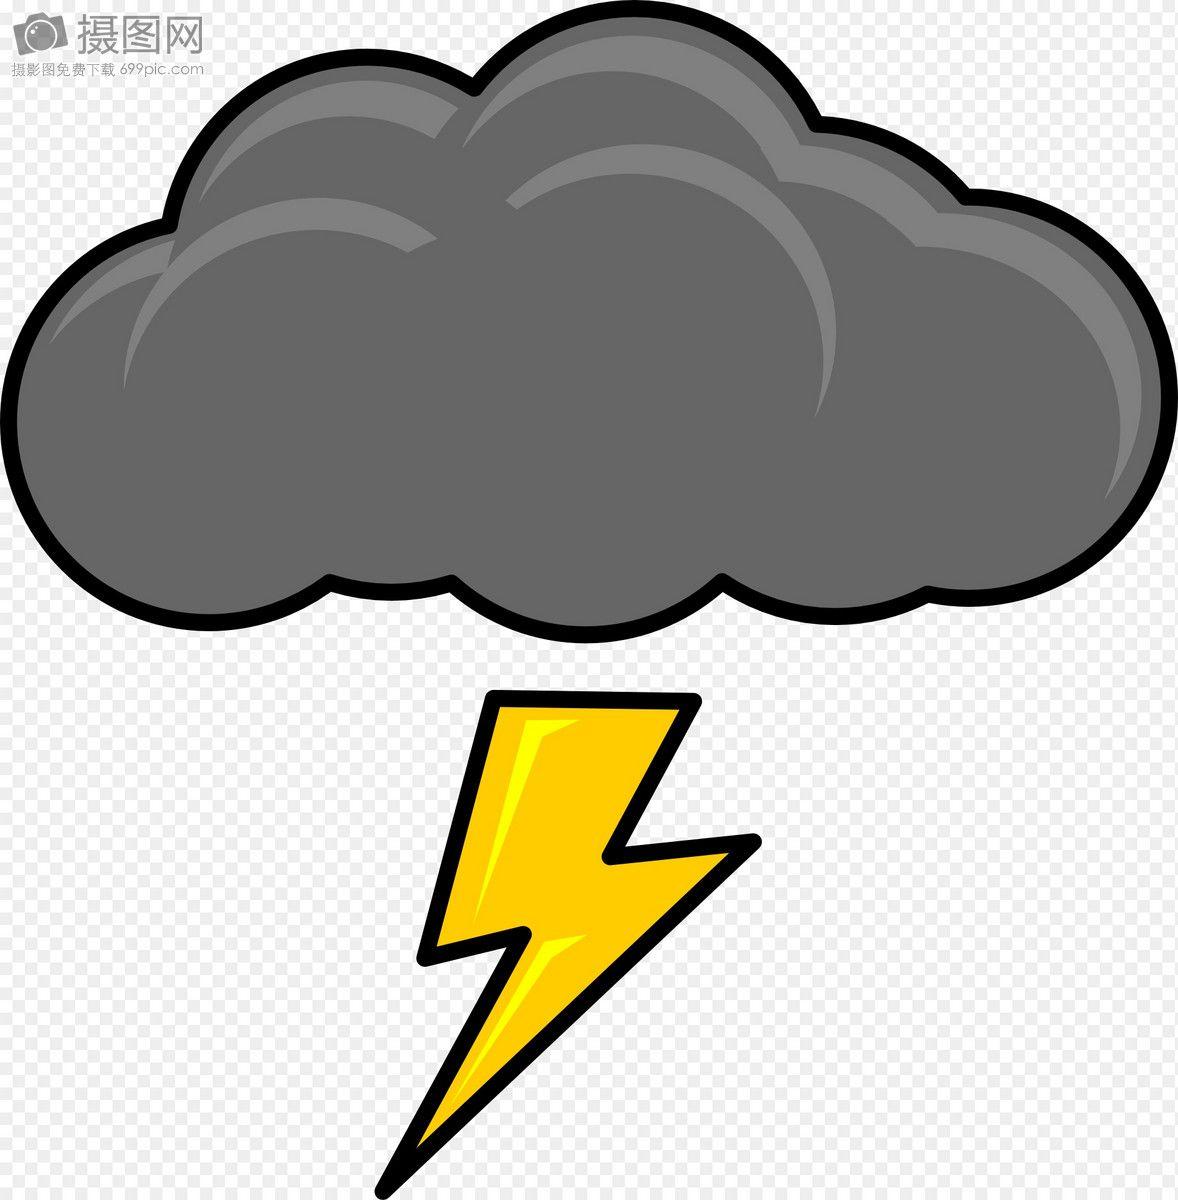 Strong Lightning Logo - Strong lightning meteorology graphics image_picture free download ...